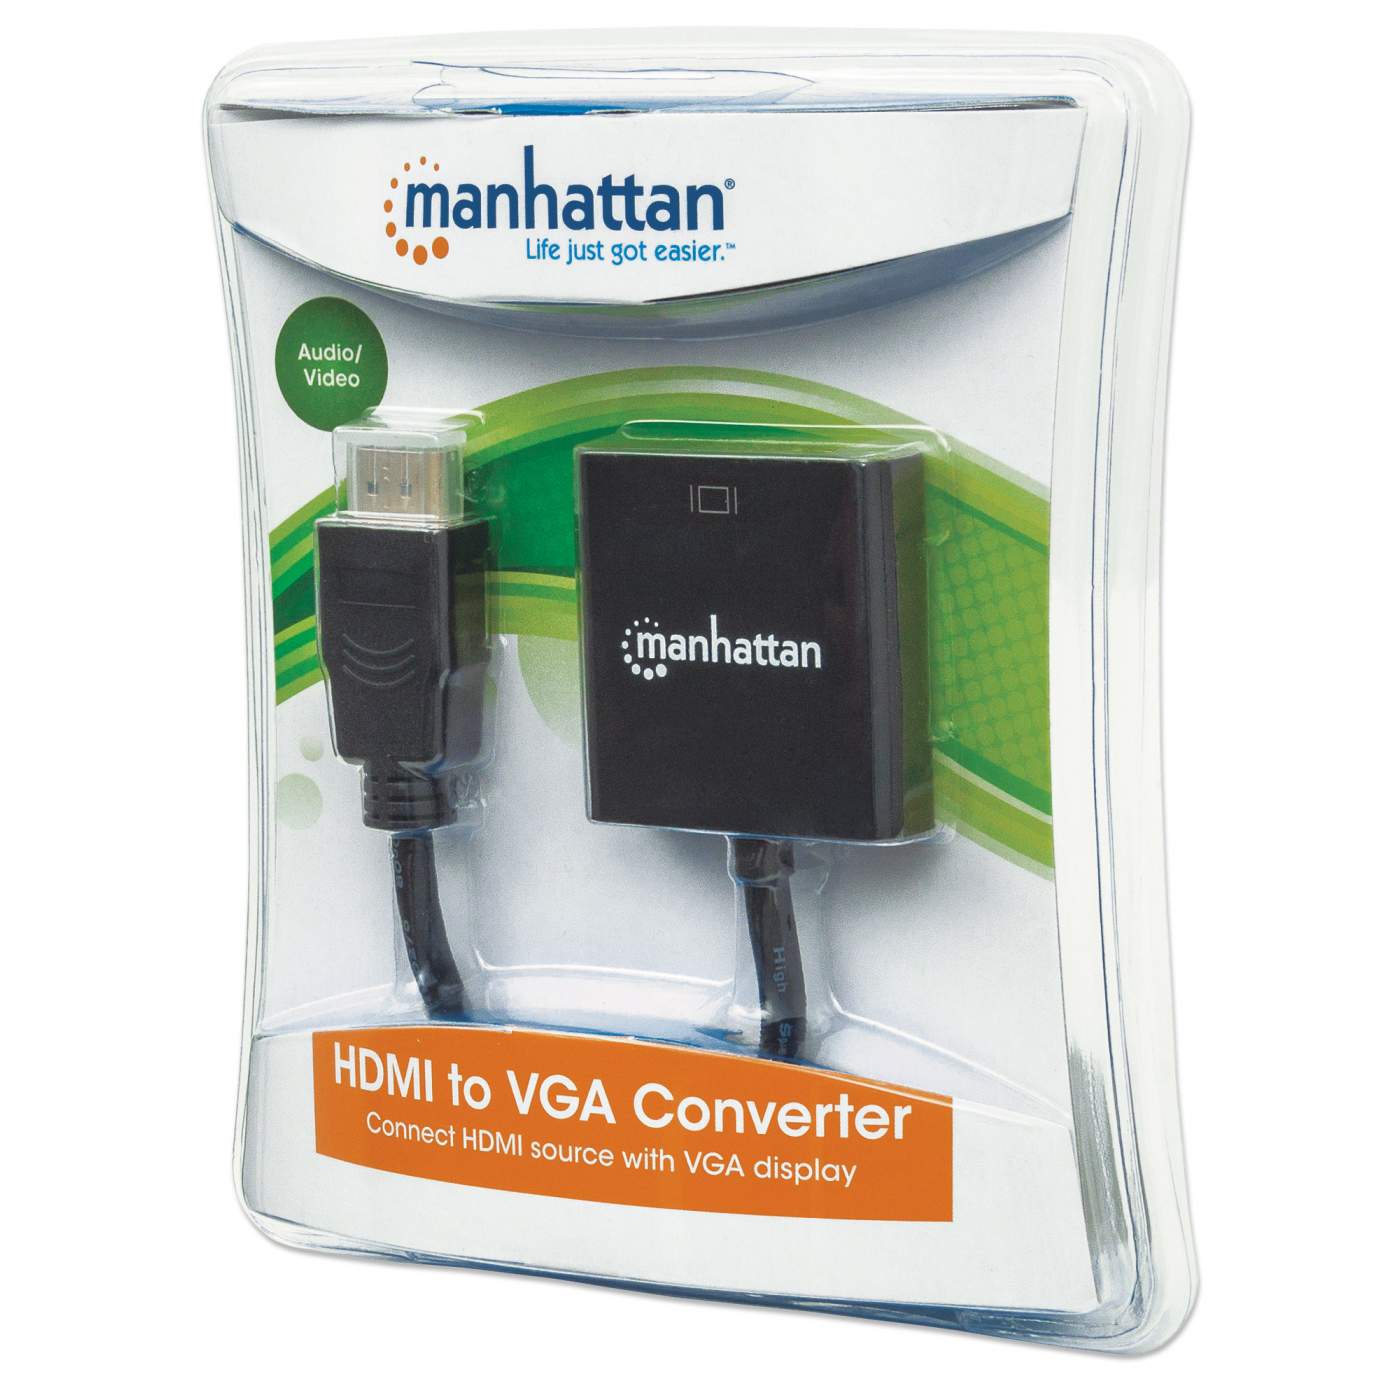 CONVERTIDOR VGA A HDMI – Tienda MYFIMPORT